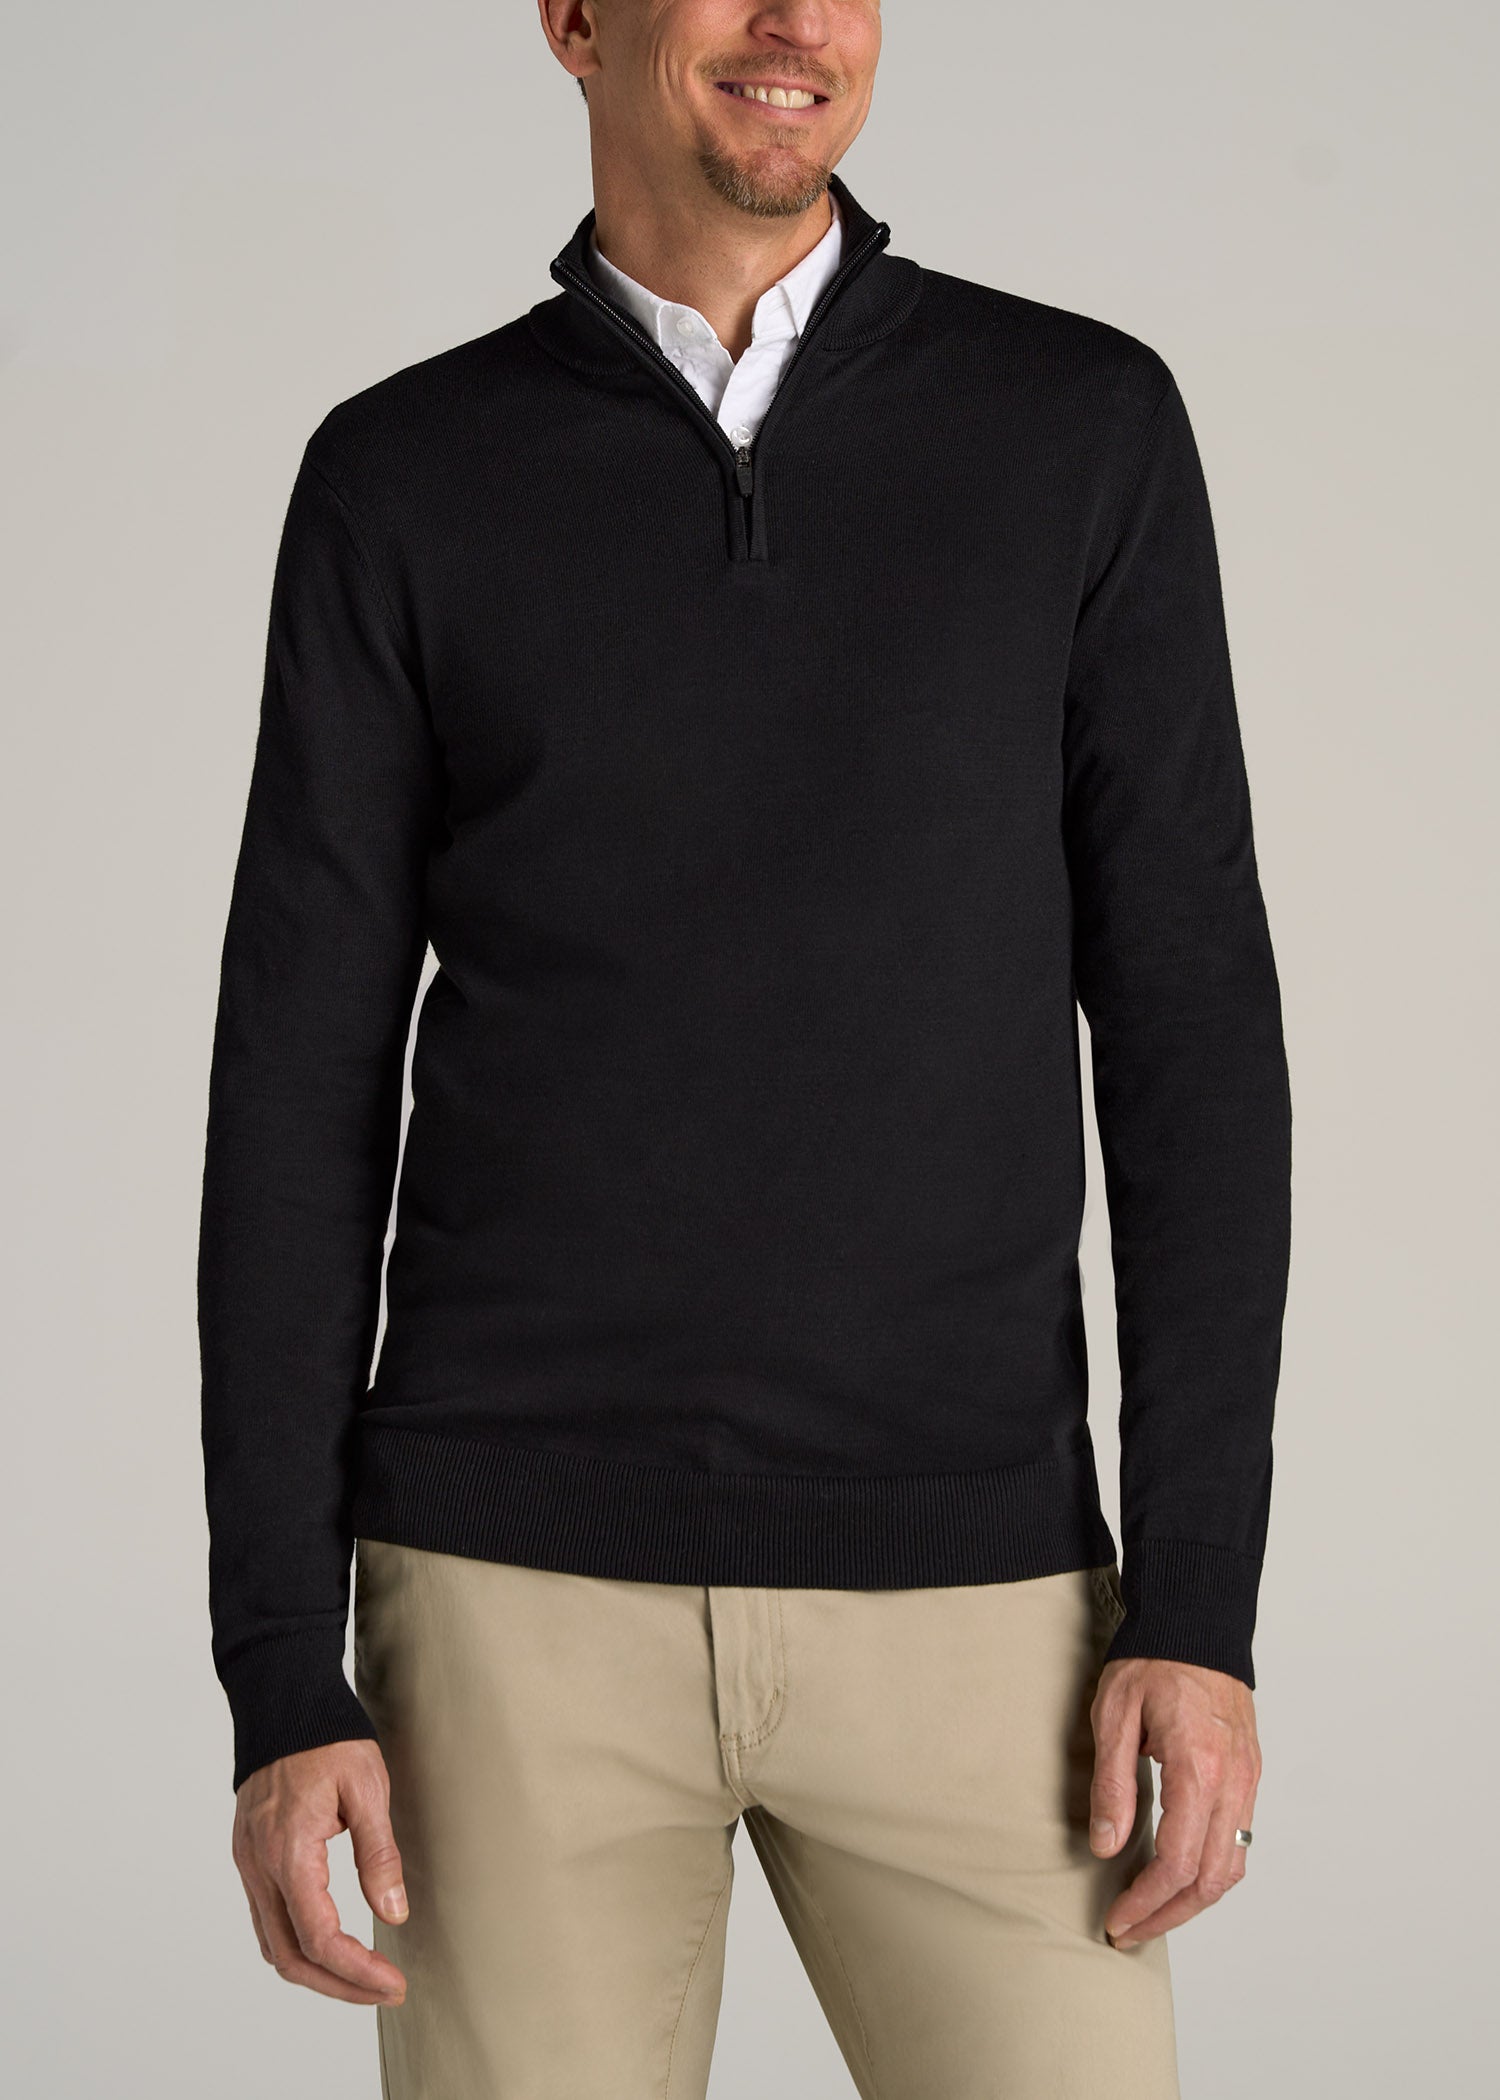 Men's Long Sleeve Quarter Zip Pullover